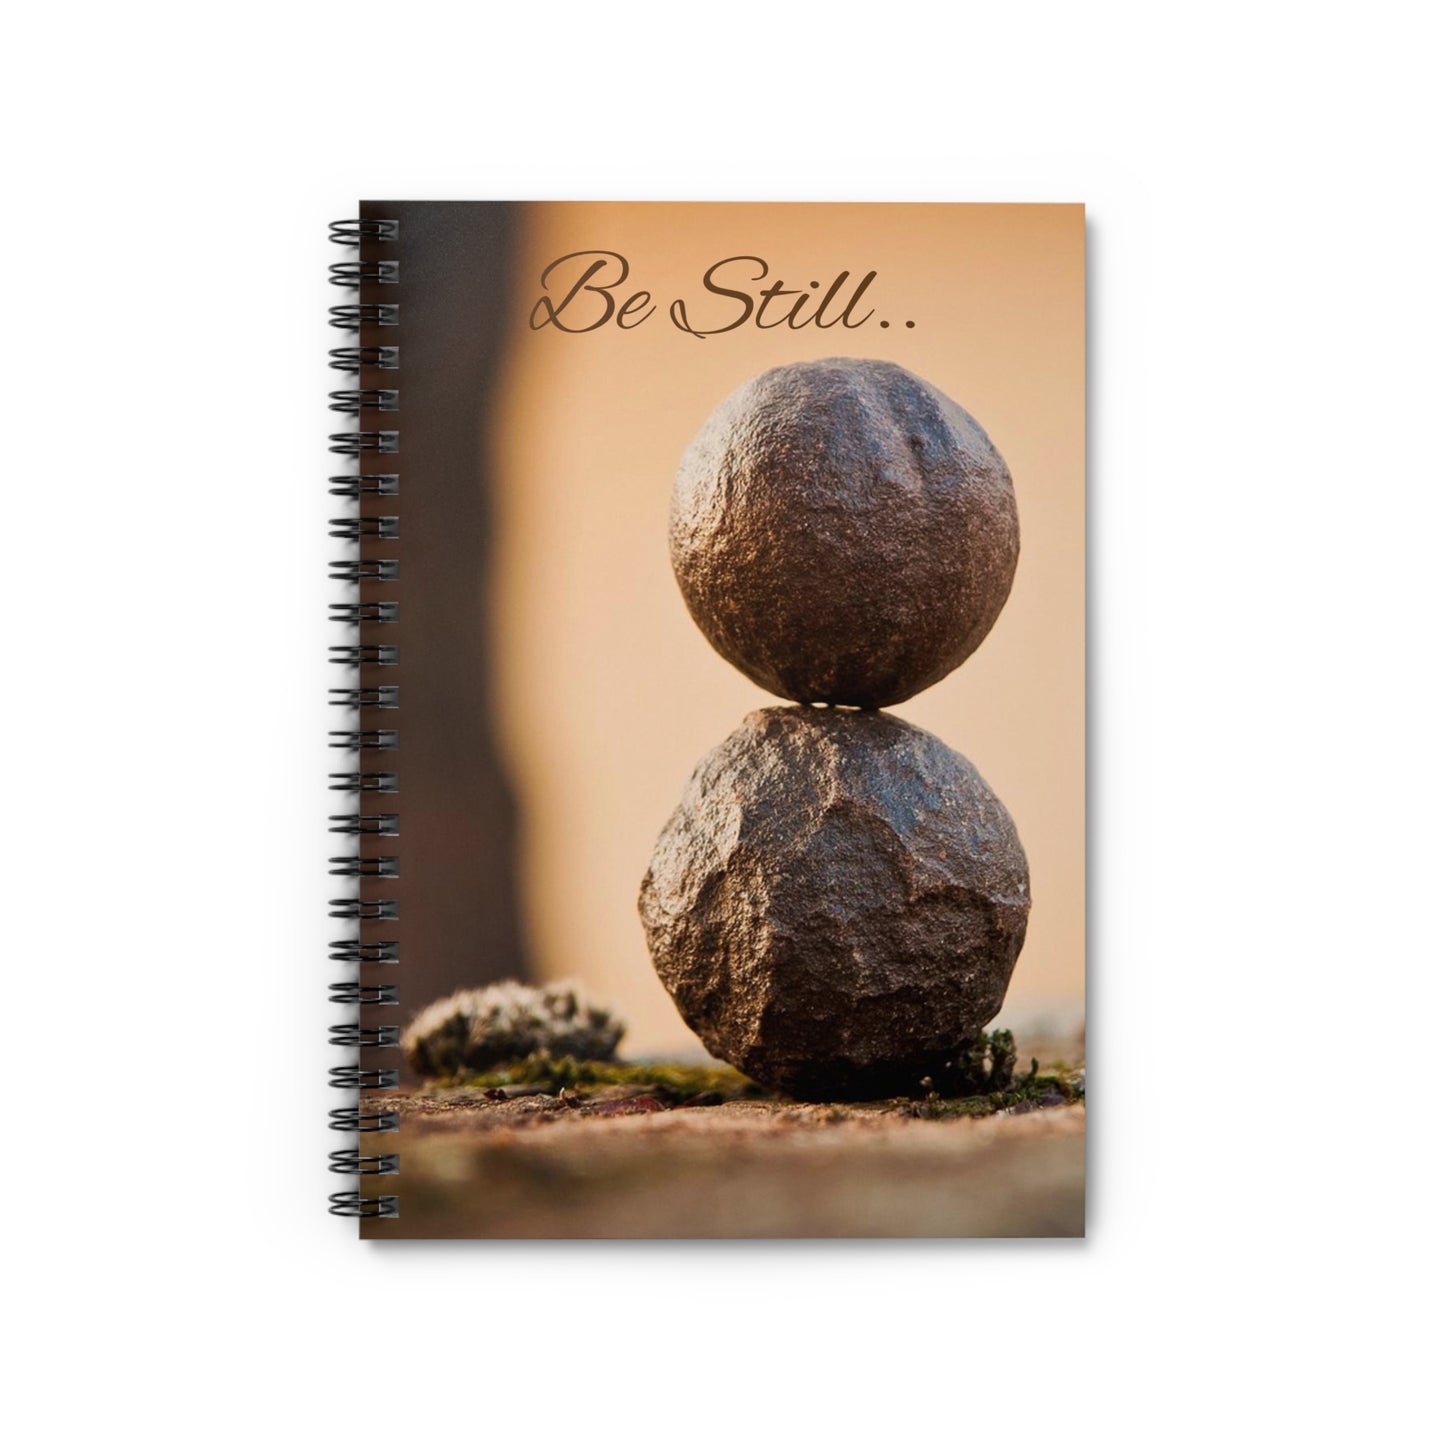 Be Still Spiral Notebook - Ruled Line